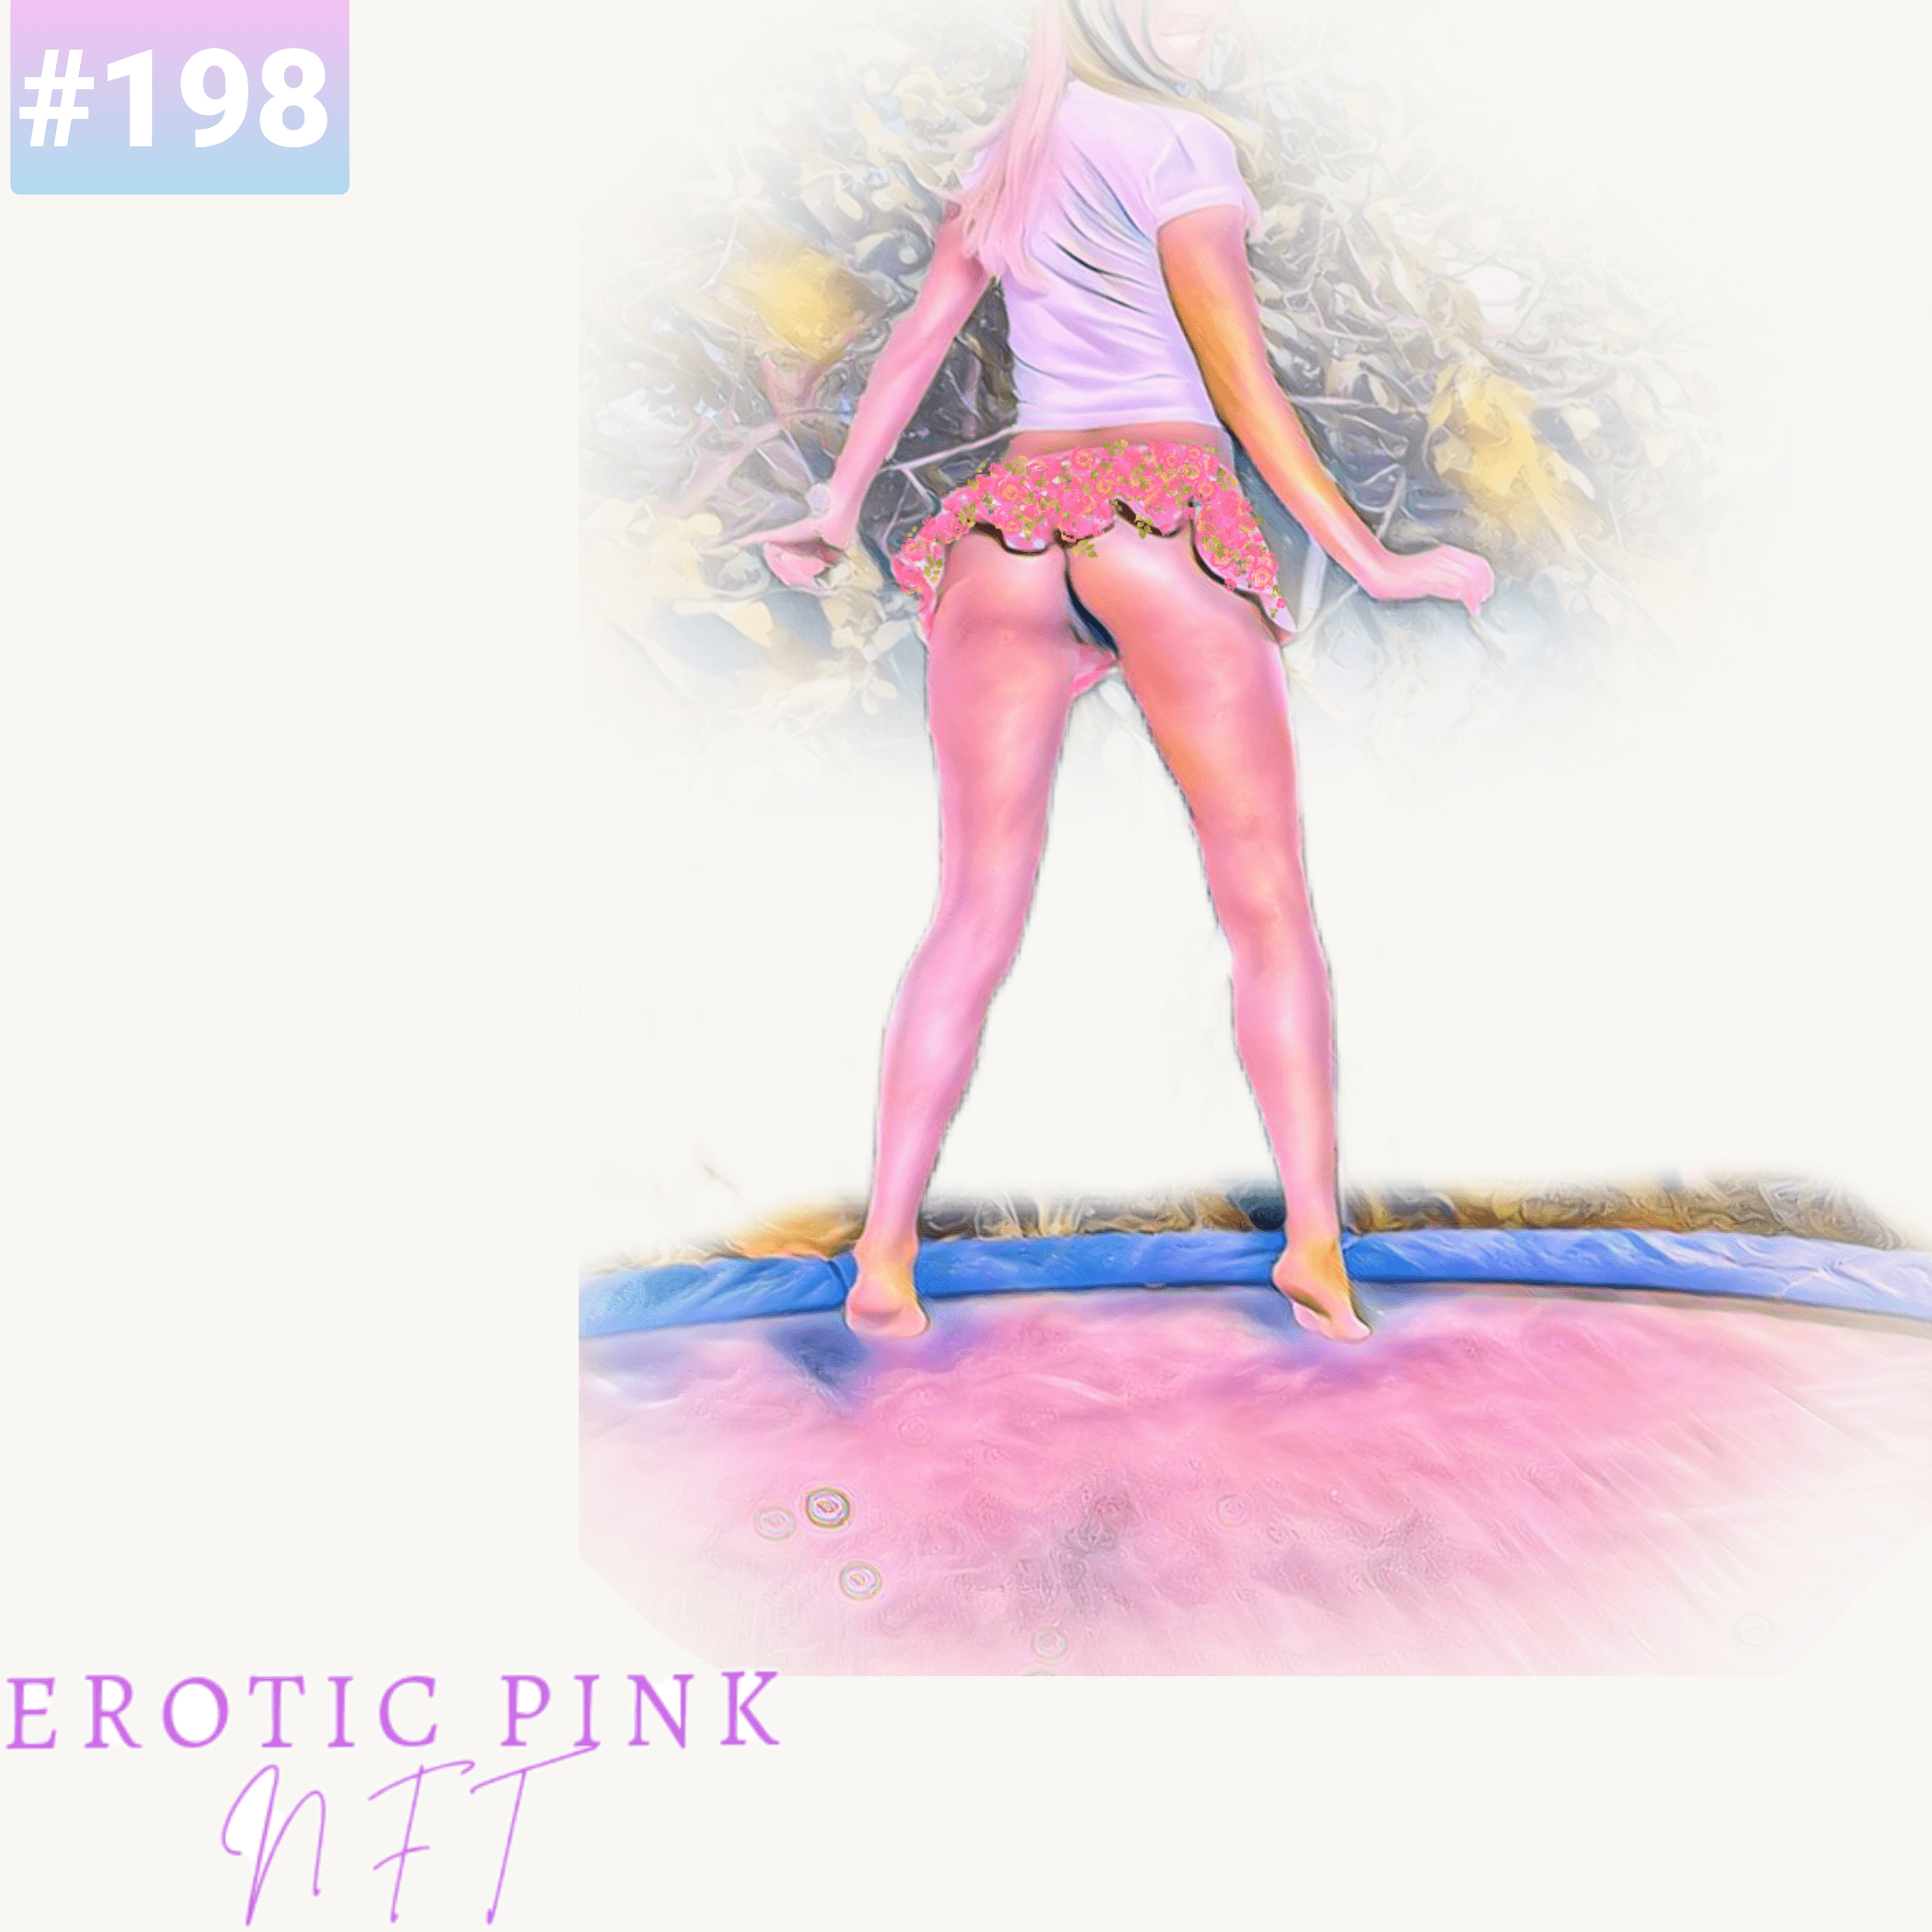 Erotic Pink #198